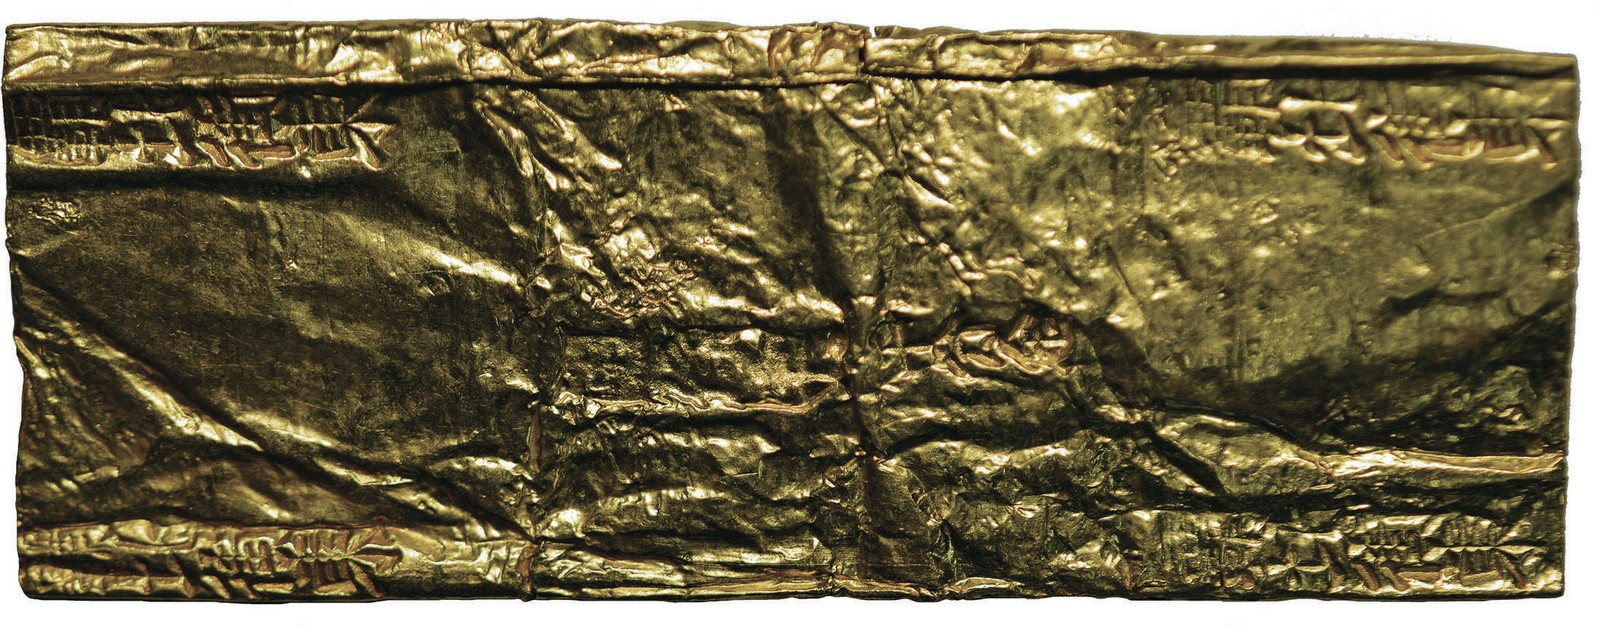 COINS, 錢幣, CHINA – SYCEES, 中國 - 元寶, Southern Song 南宋 (1127-1279 AD): Gold Leaf 金葉子, stamped “